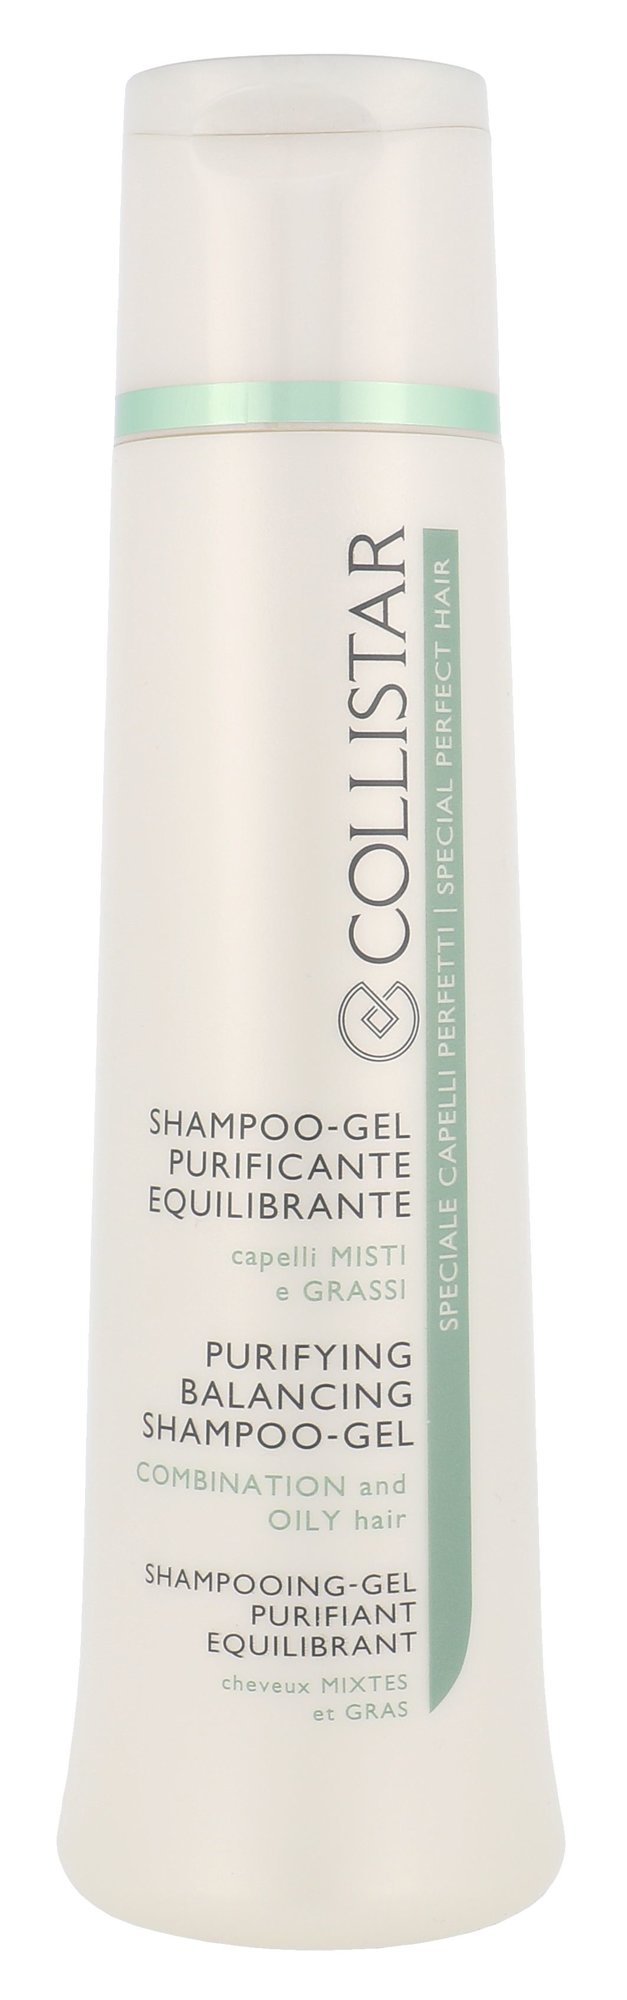 Collistar Purifying Balancing Shampoo-Gel šampūnas